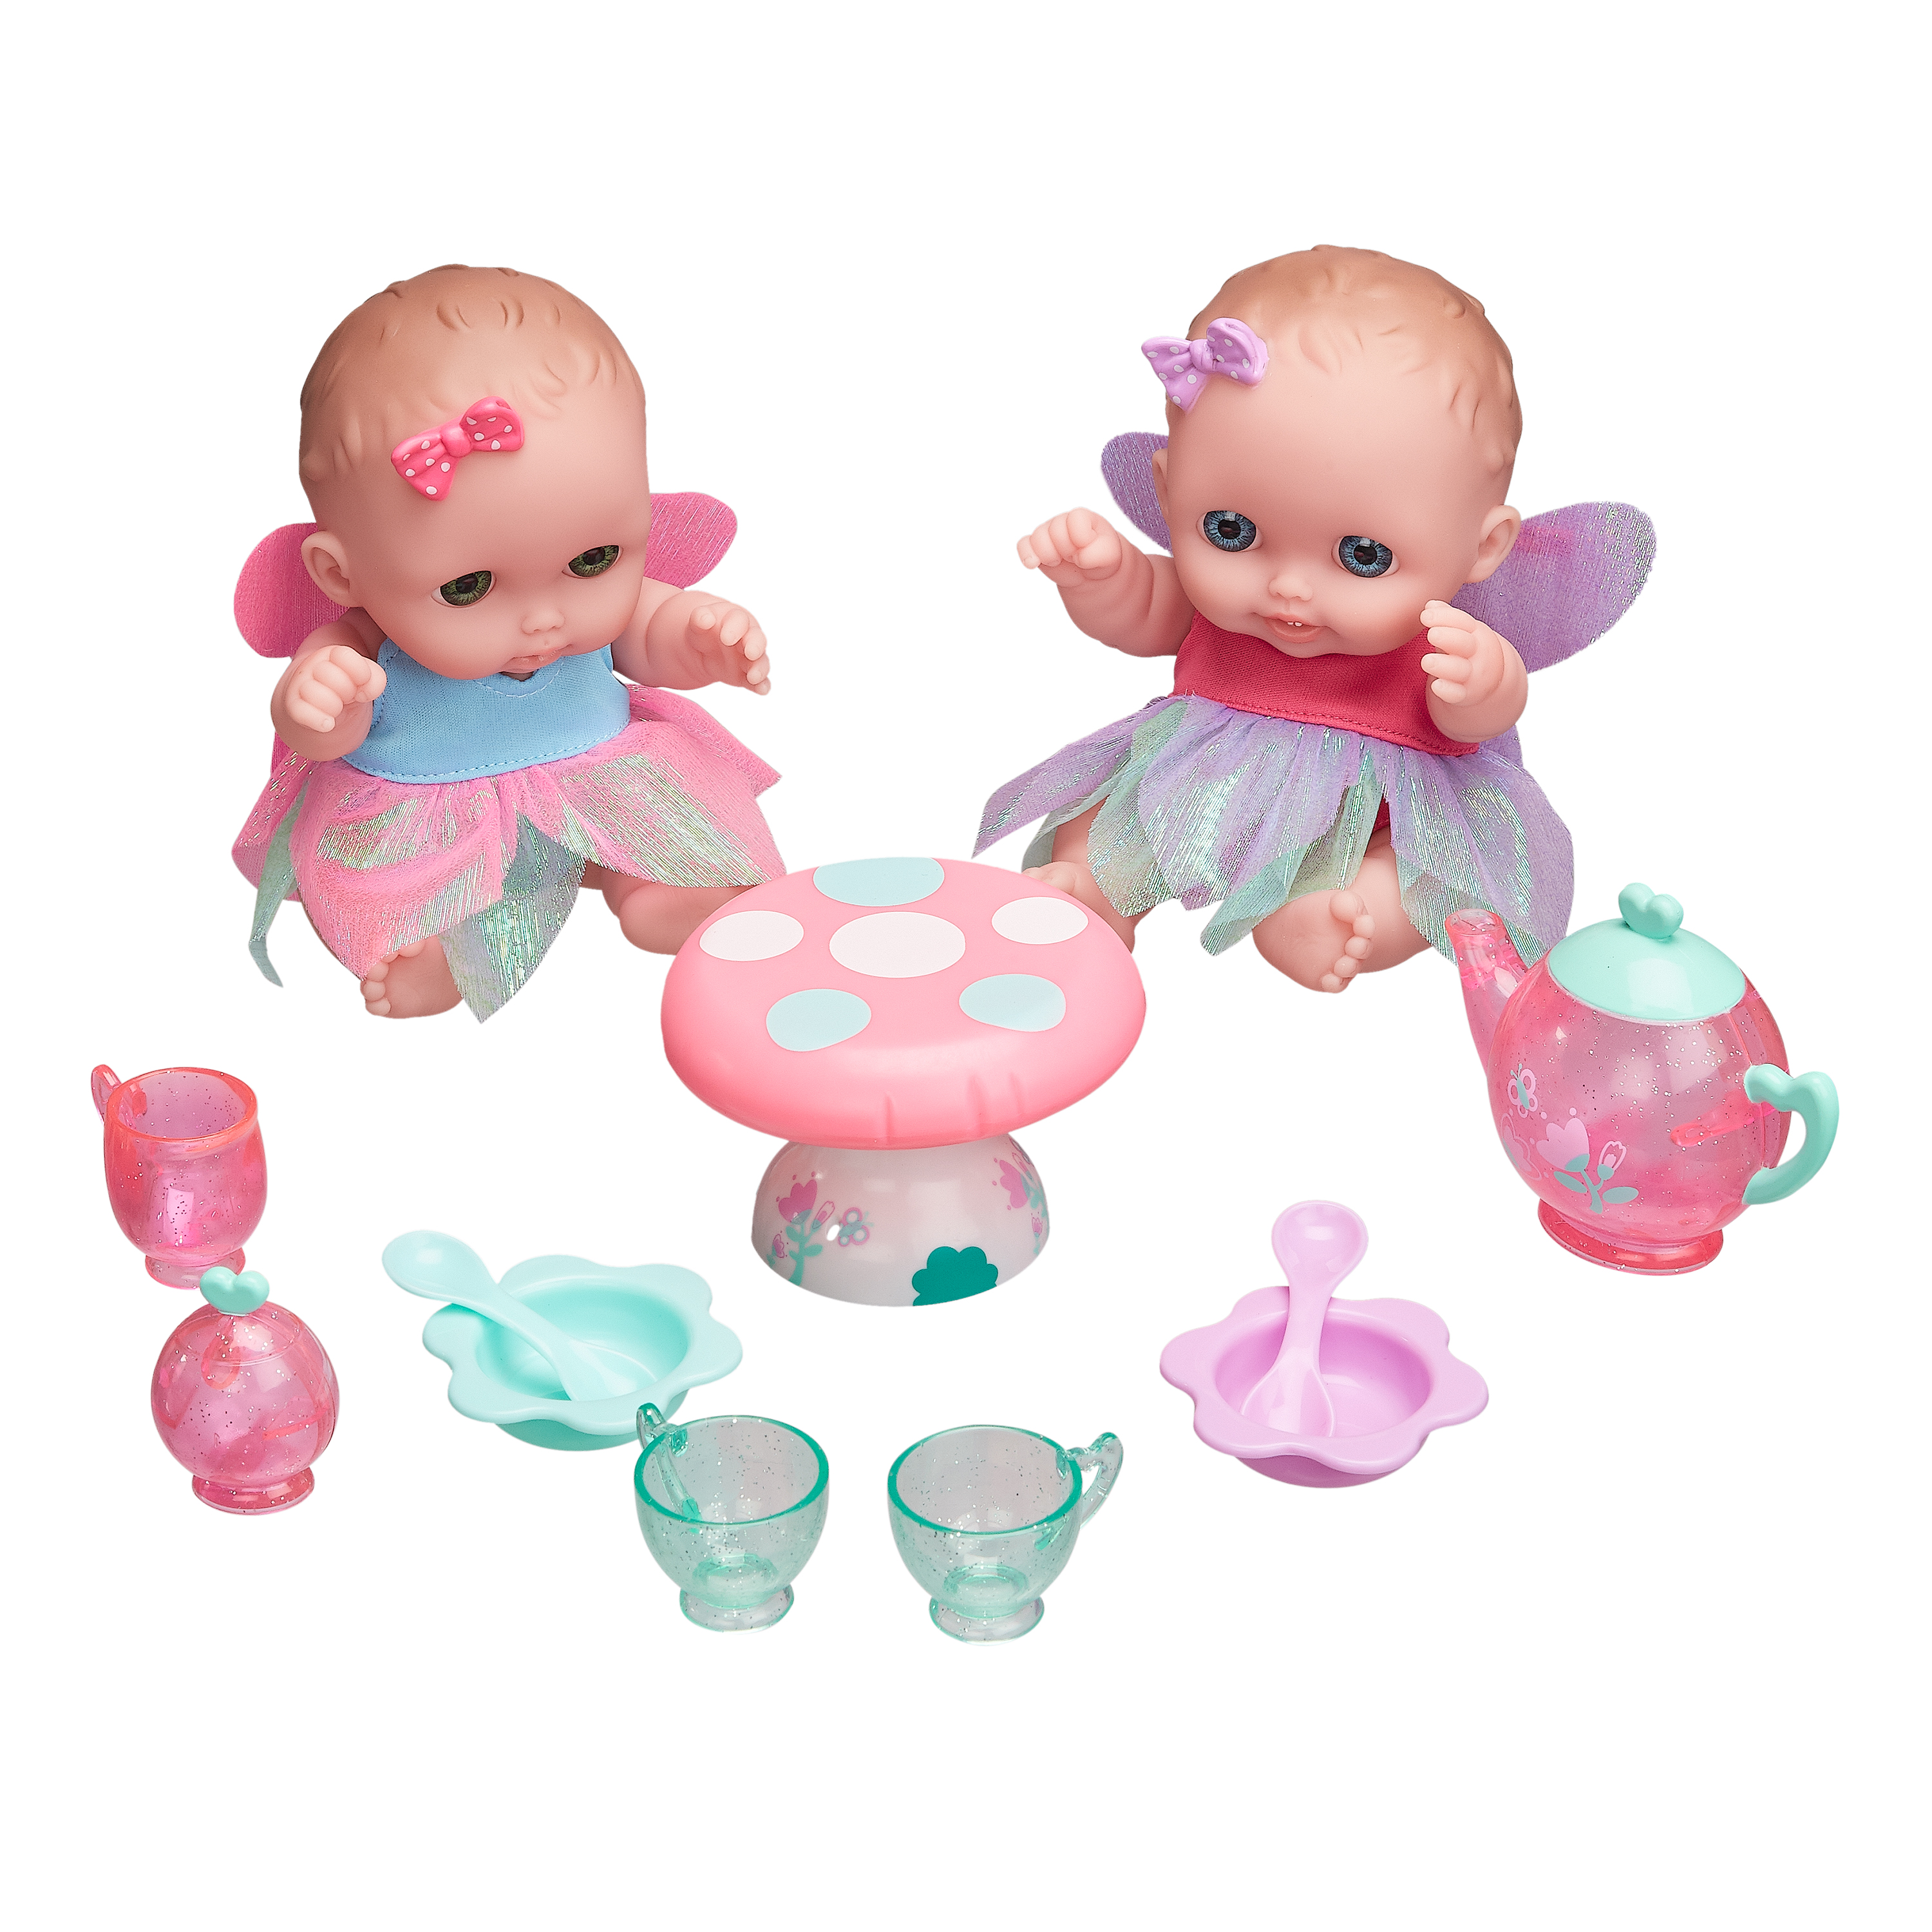 My Sweet Love Lots Lil Cutesies Twin Doll Fairy Tea Set - image 1 of 4